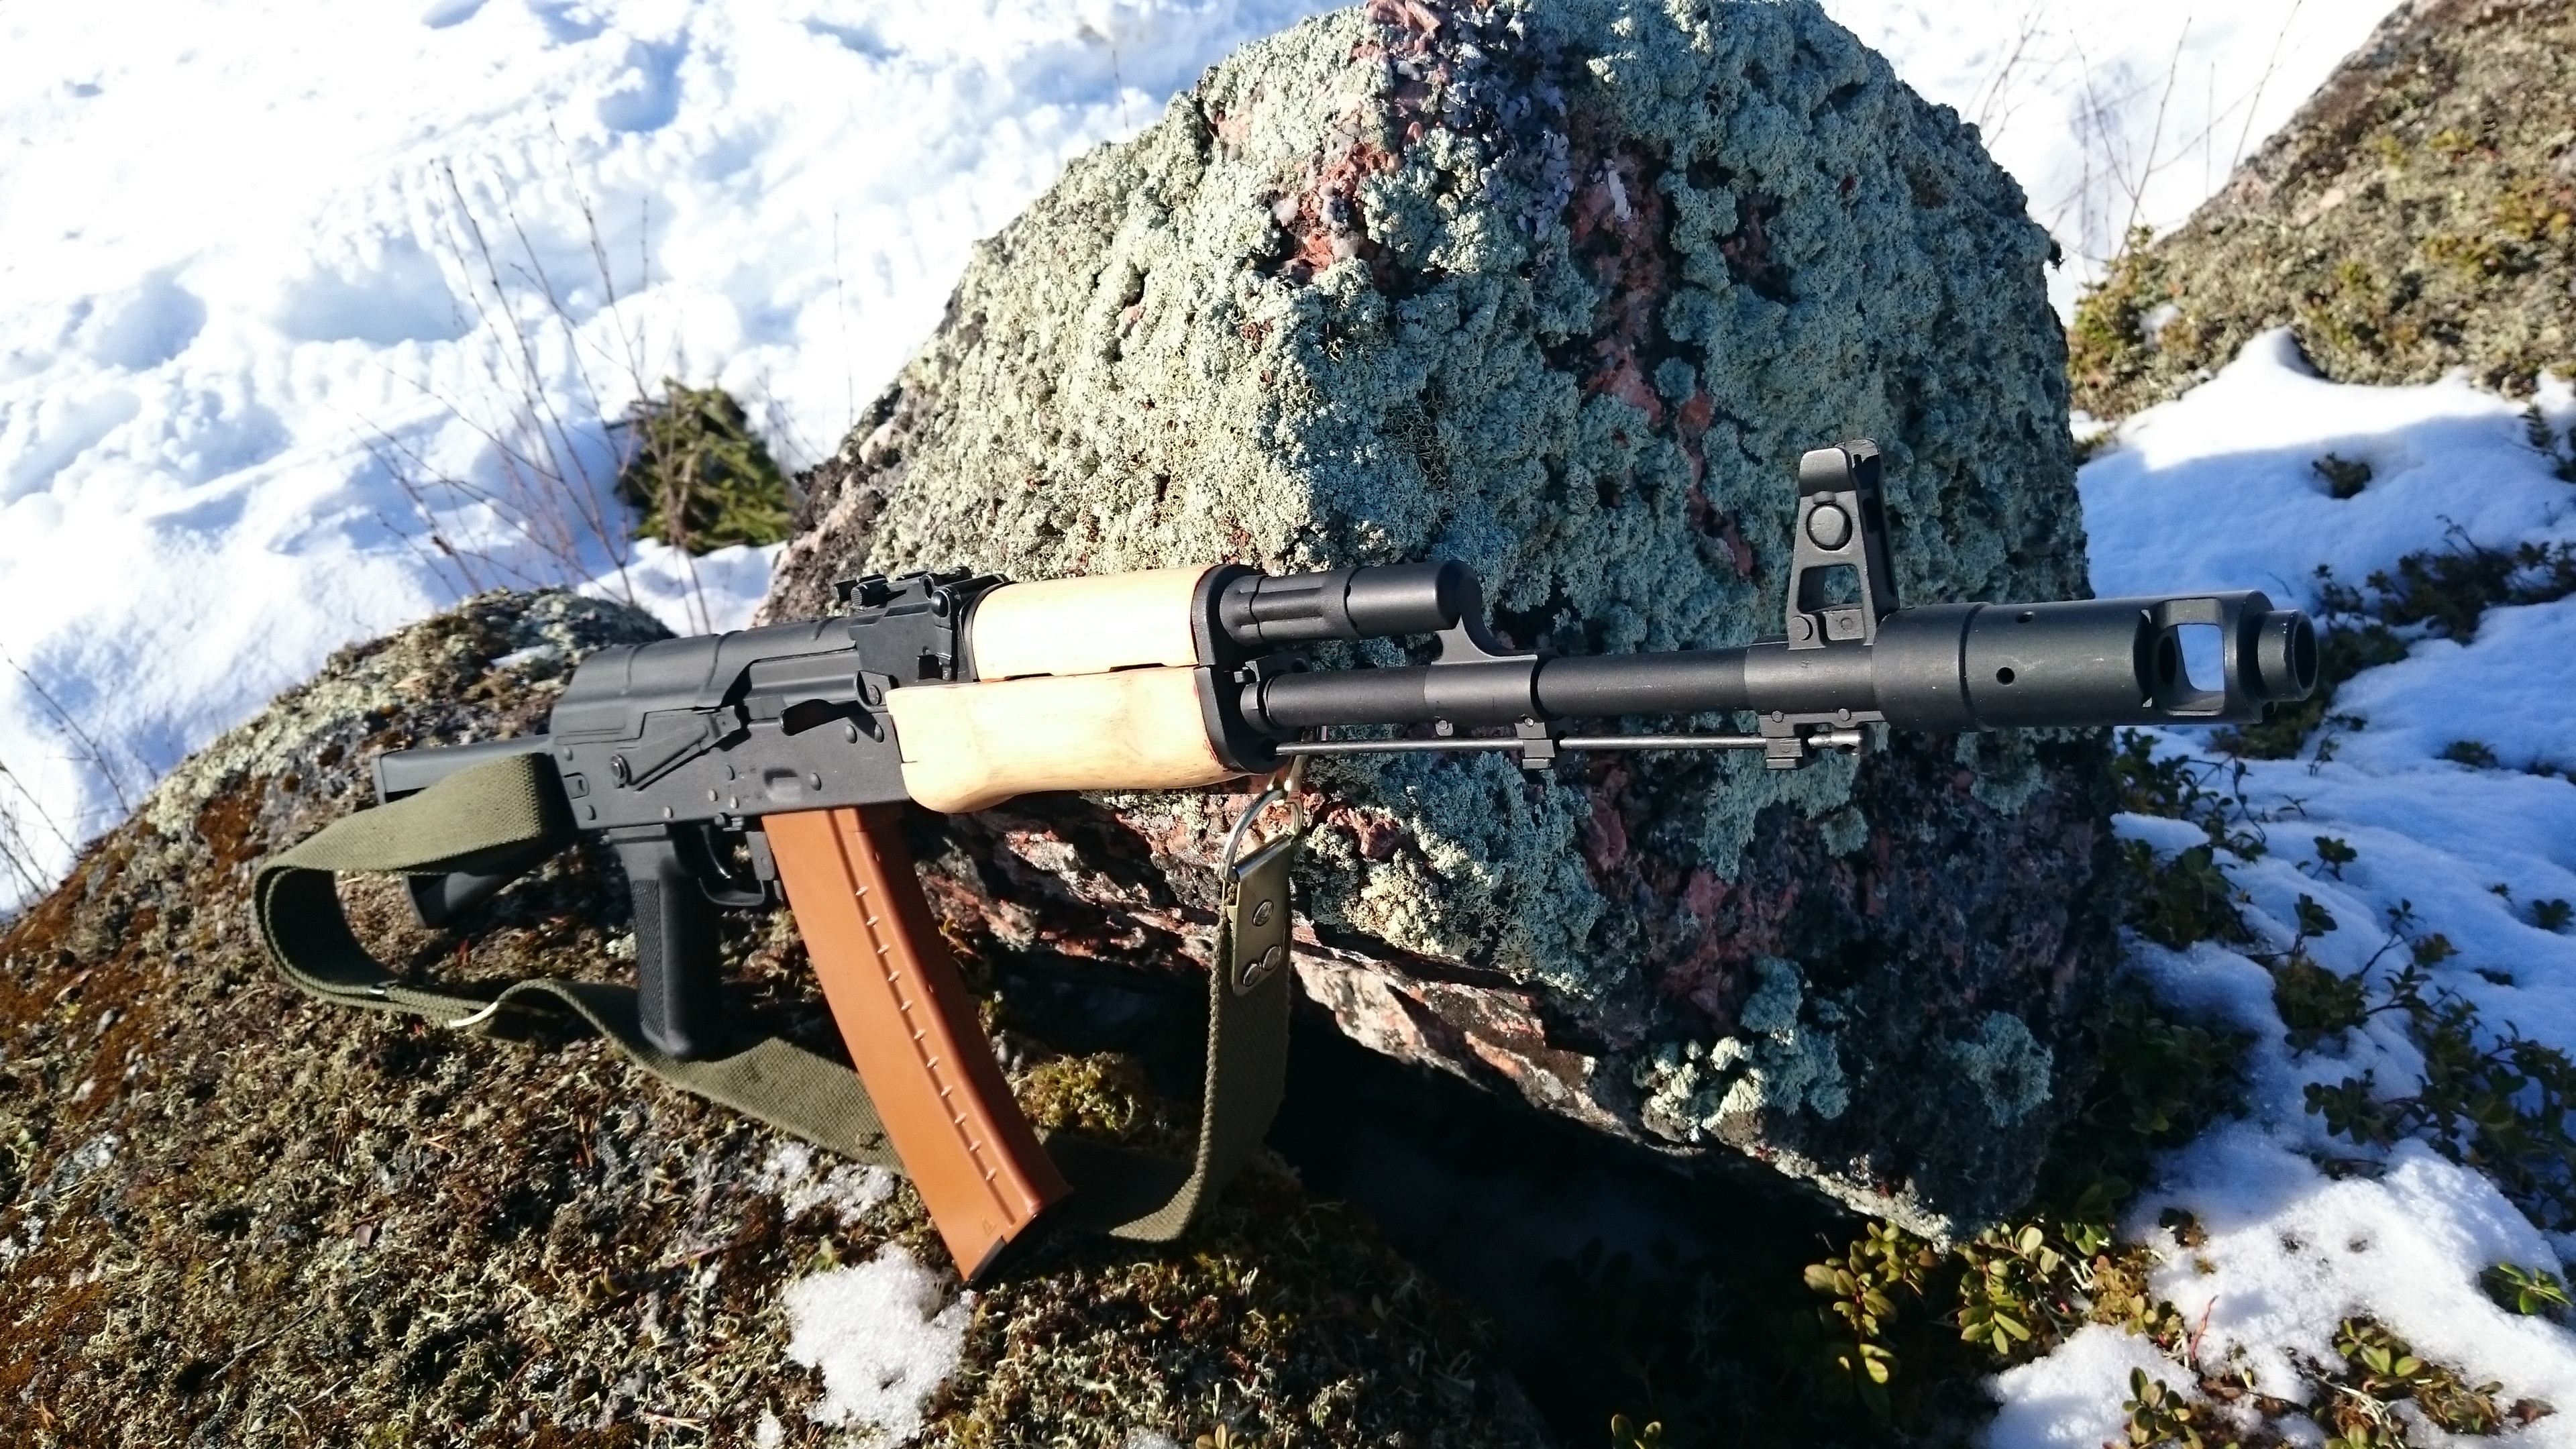 General 3840x2160 weapon Airsoft rifles AK-74 AK-47 snow assault rifle Russian/Soviet firearms side view sunlight gun snow covered